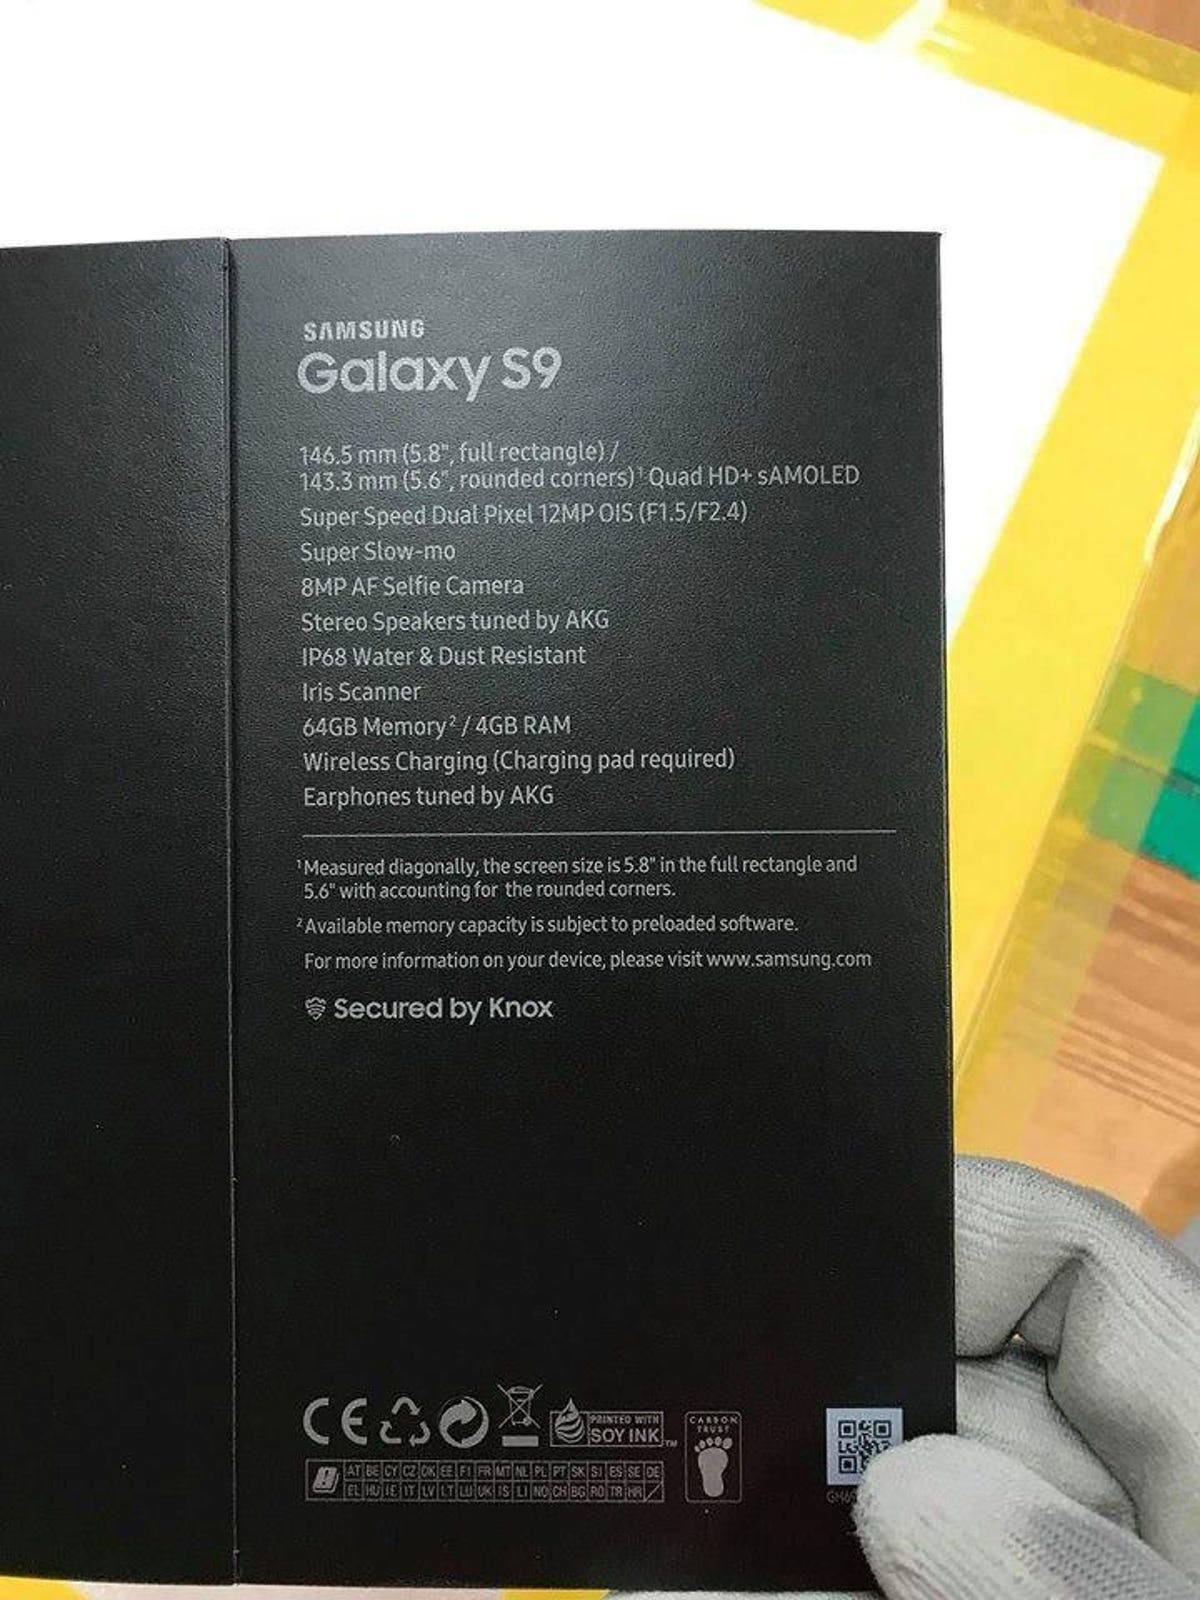 Leaked: Galaxy S9 box